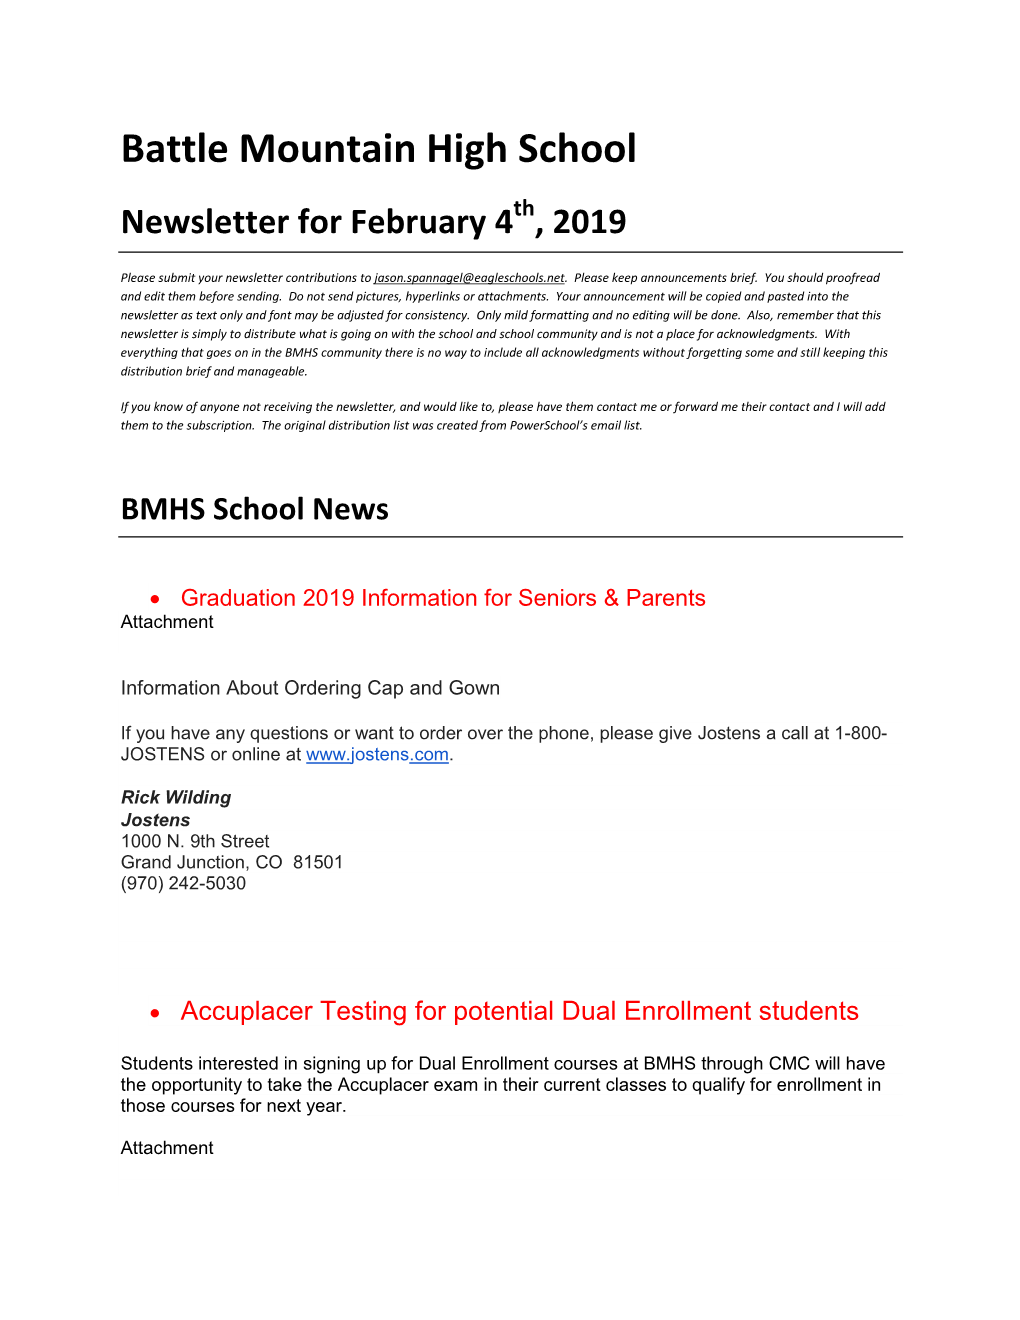 Battle Mountain High School Newsletter for February 4Th, 2019